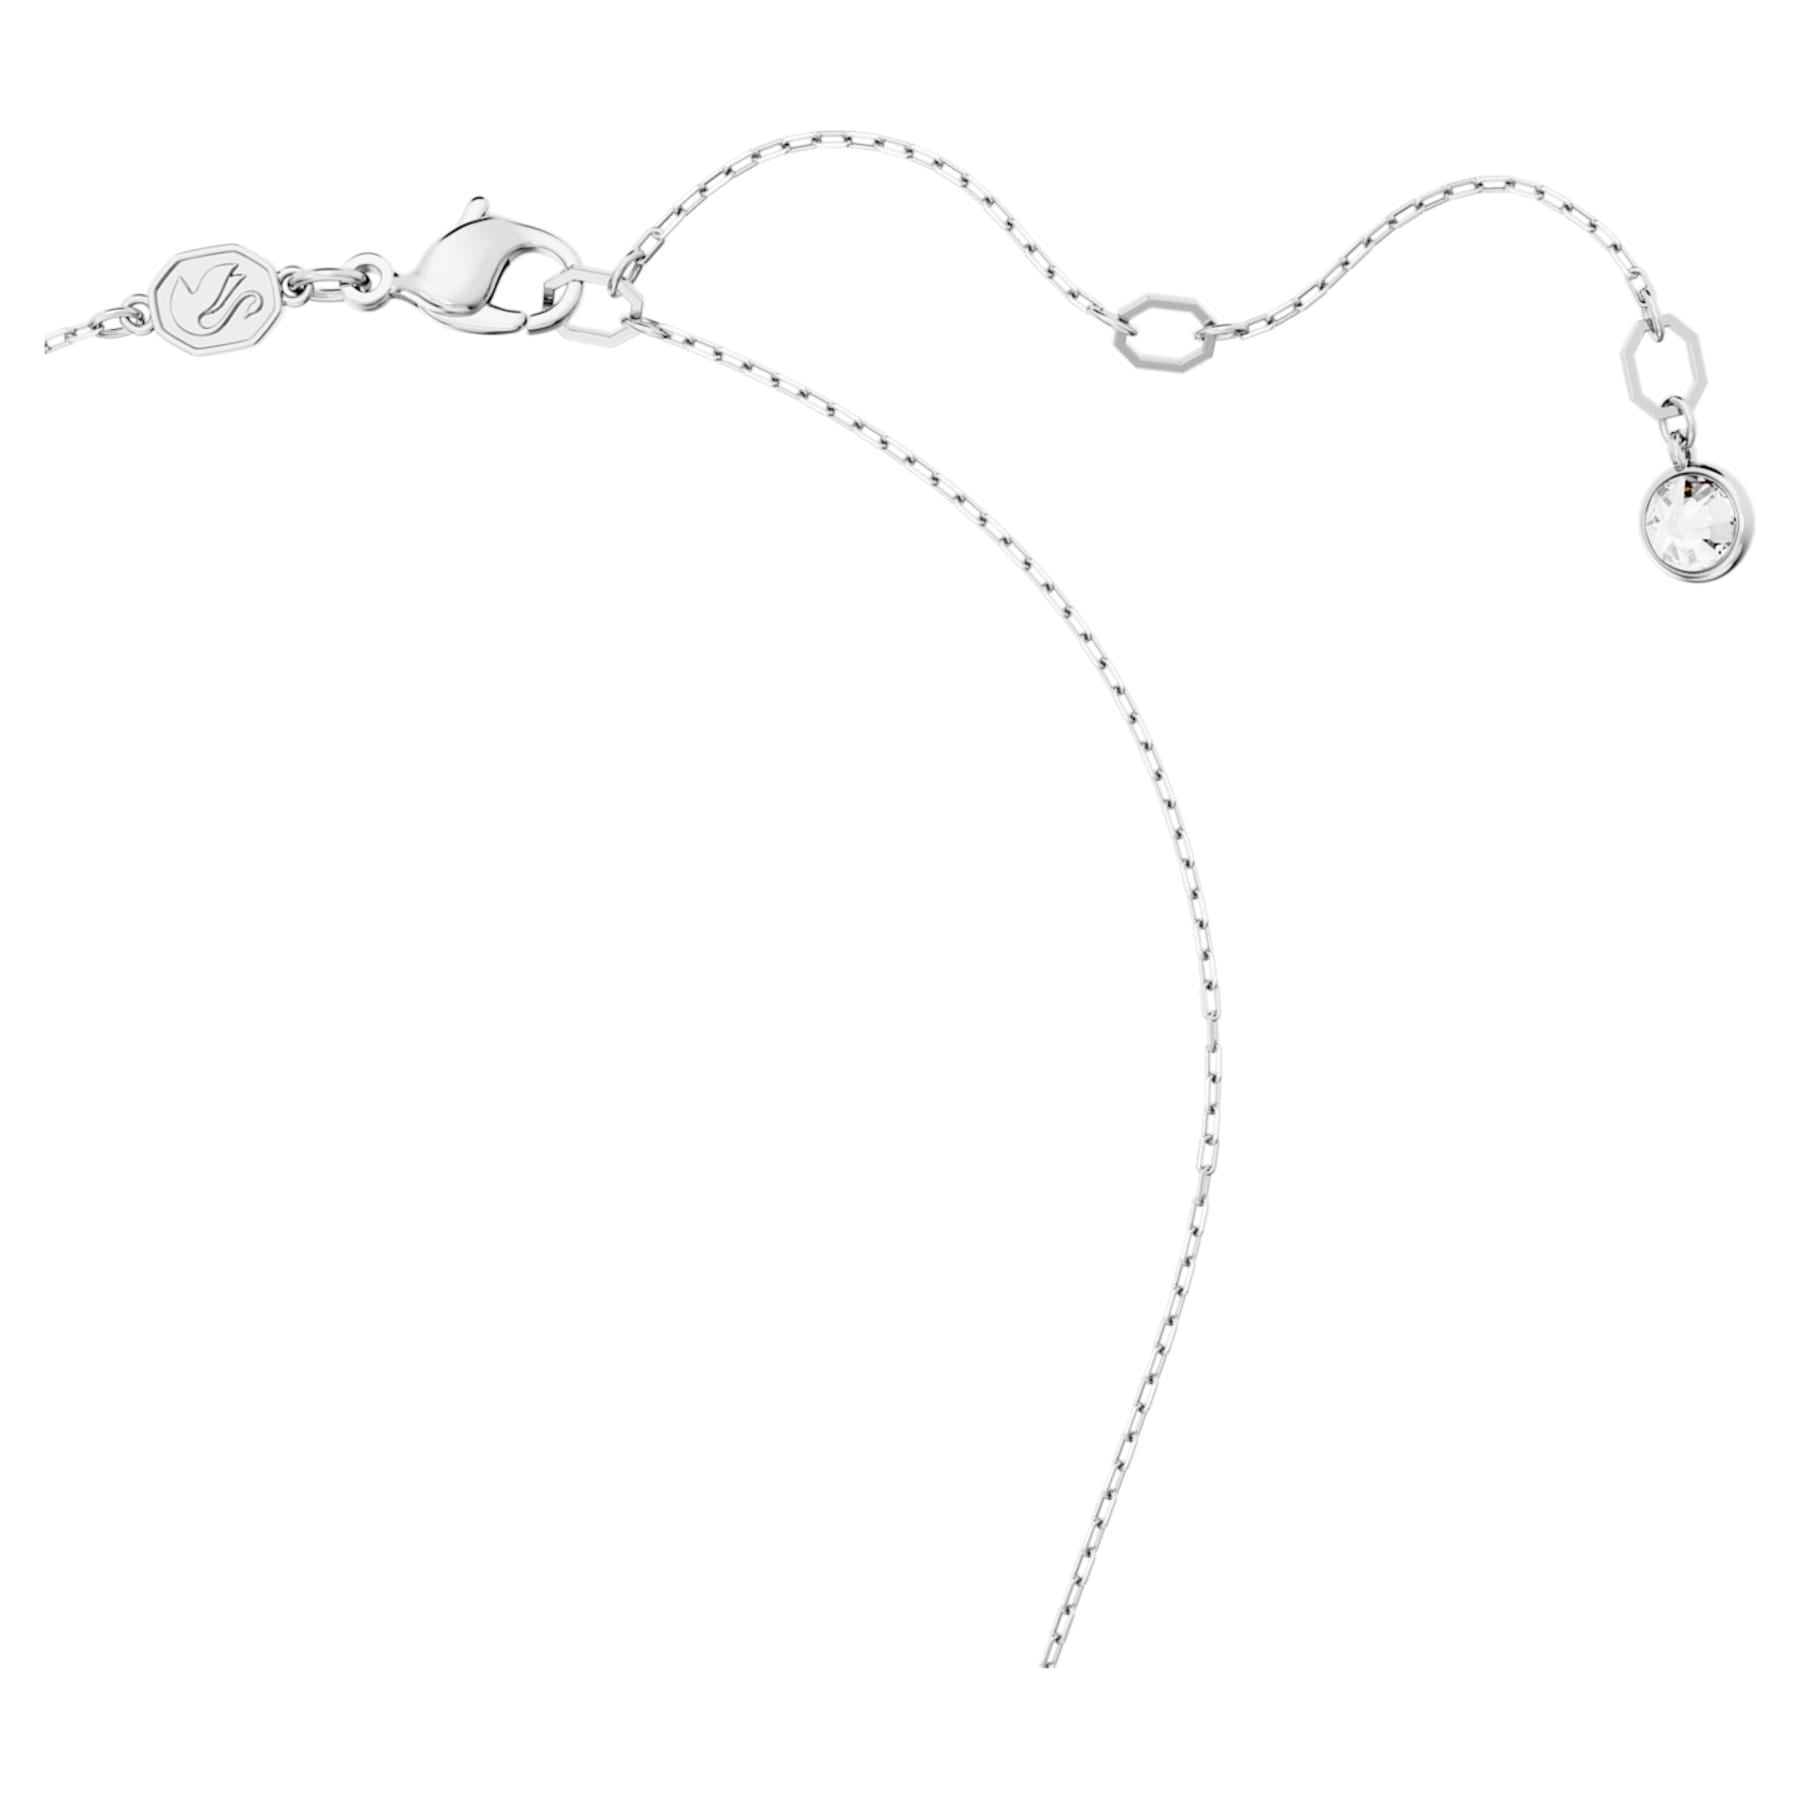 Luna - White Silver - Necklace - Swarovski